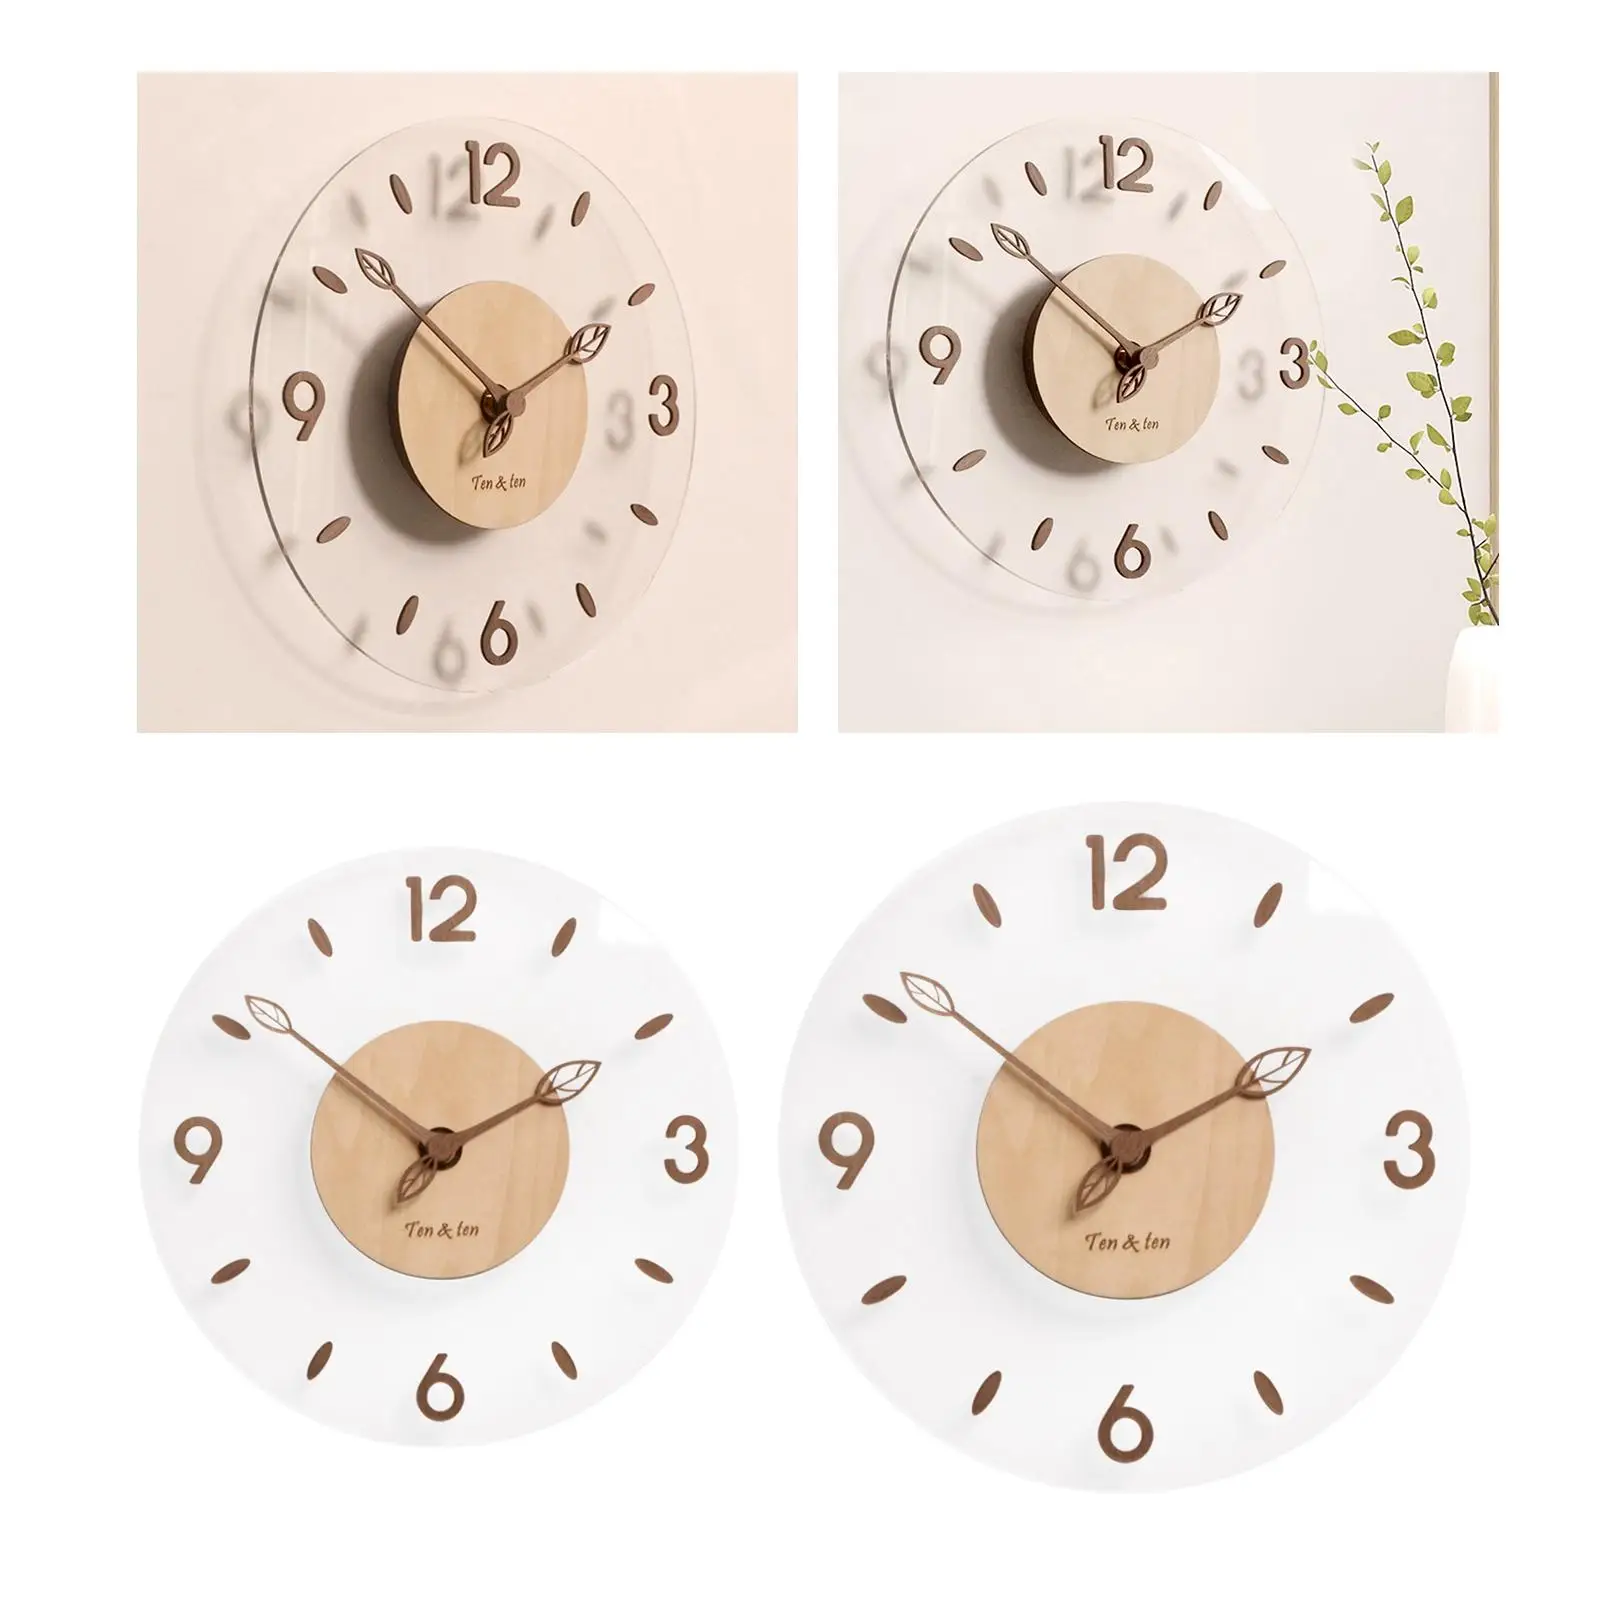 Modern Minimalist Acrylic Wall Clock Silent Decorative Round Wall Hanging Clocks for Cafe Bedroom Decor